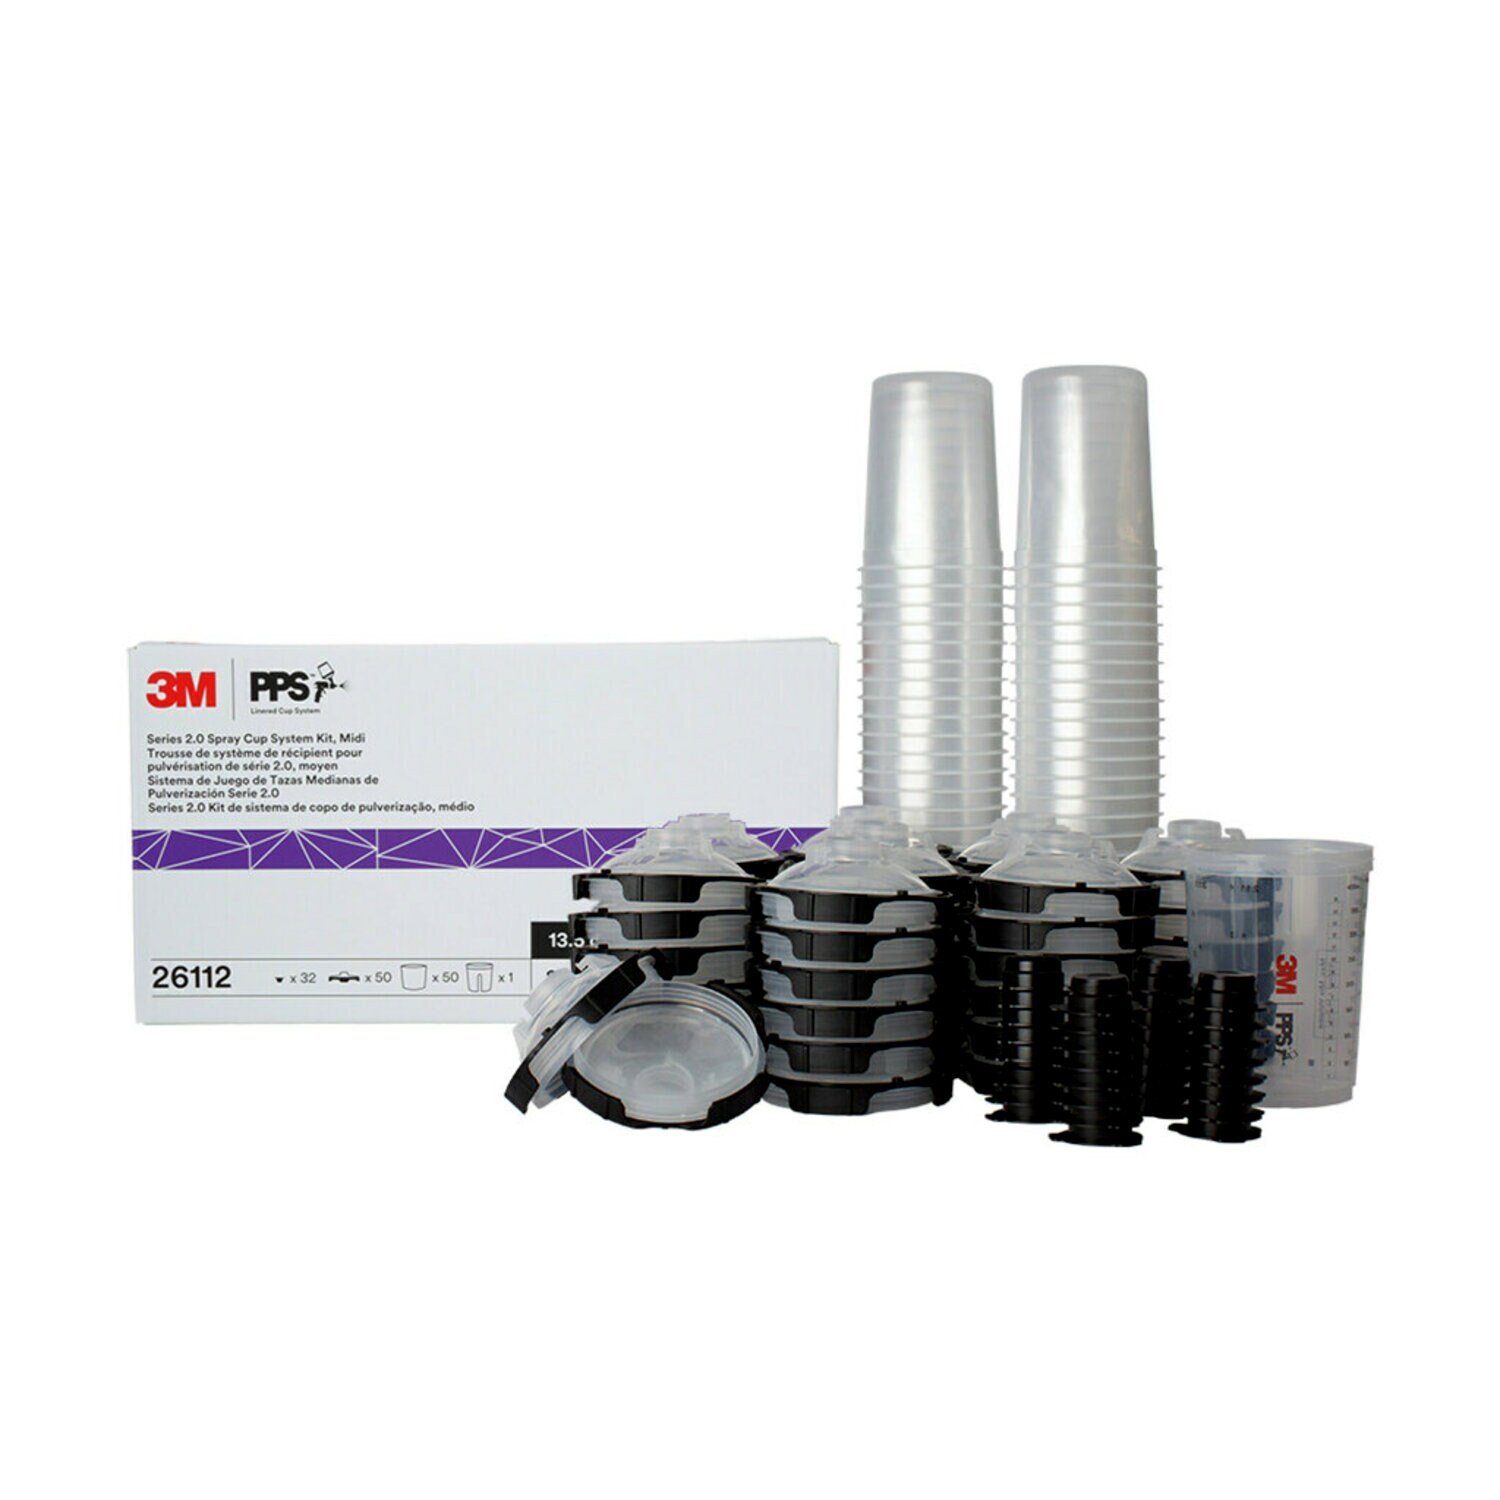 7100169390 - 3M PPS Series 2.0 Spray Cup System Kit, 26112, Midi (13.5 fl oz, 400
mL), 200 Micron Filter, 1 kit per case